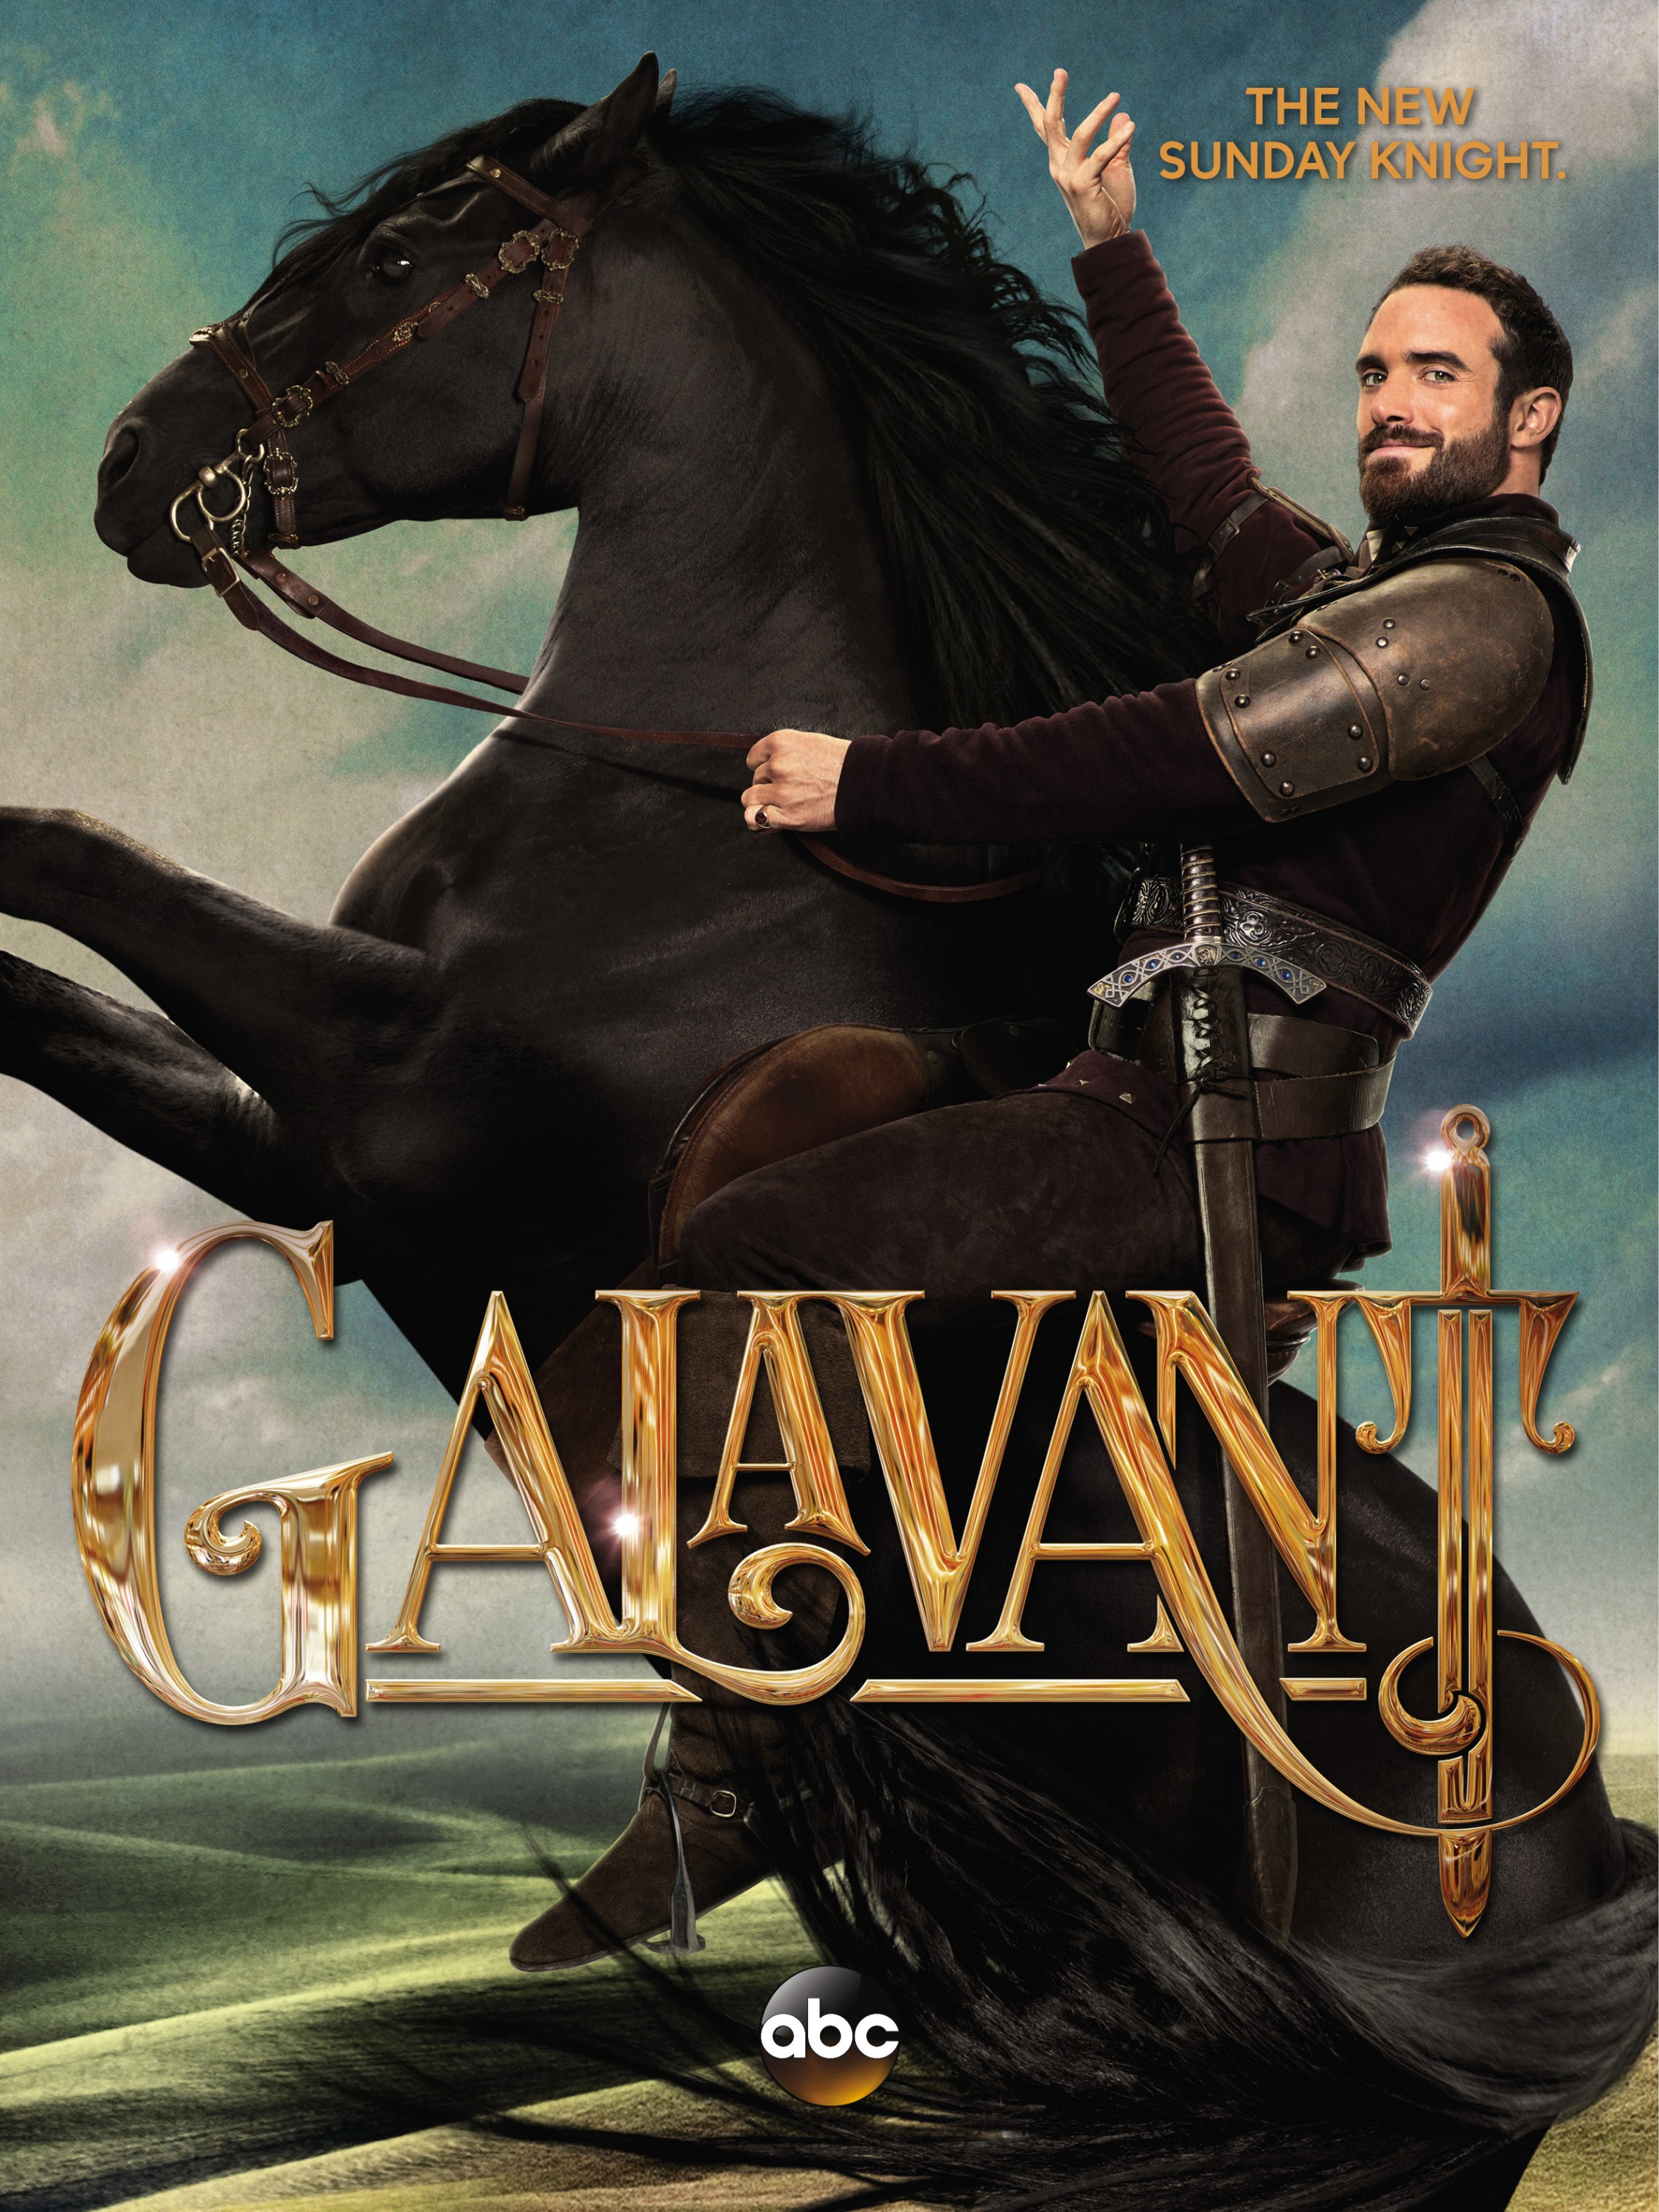 Mega Sized TV Poster Image for Galavant (#1 of 3)